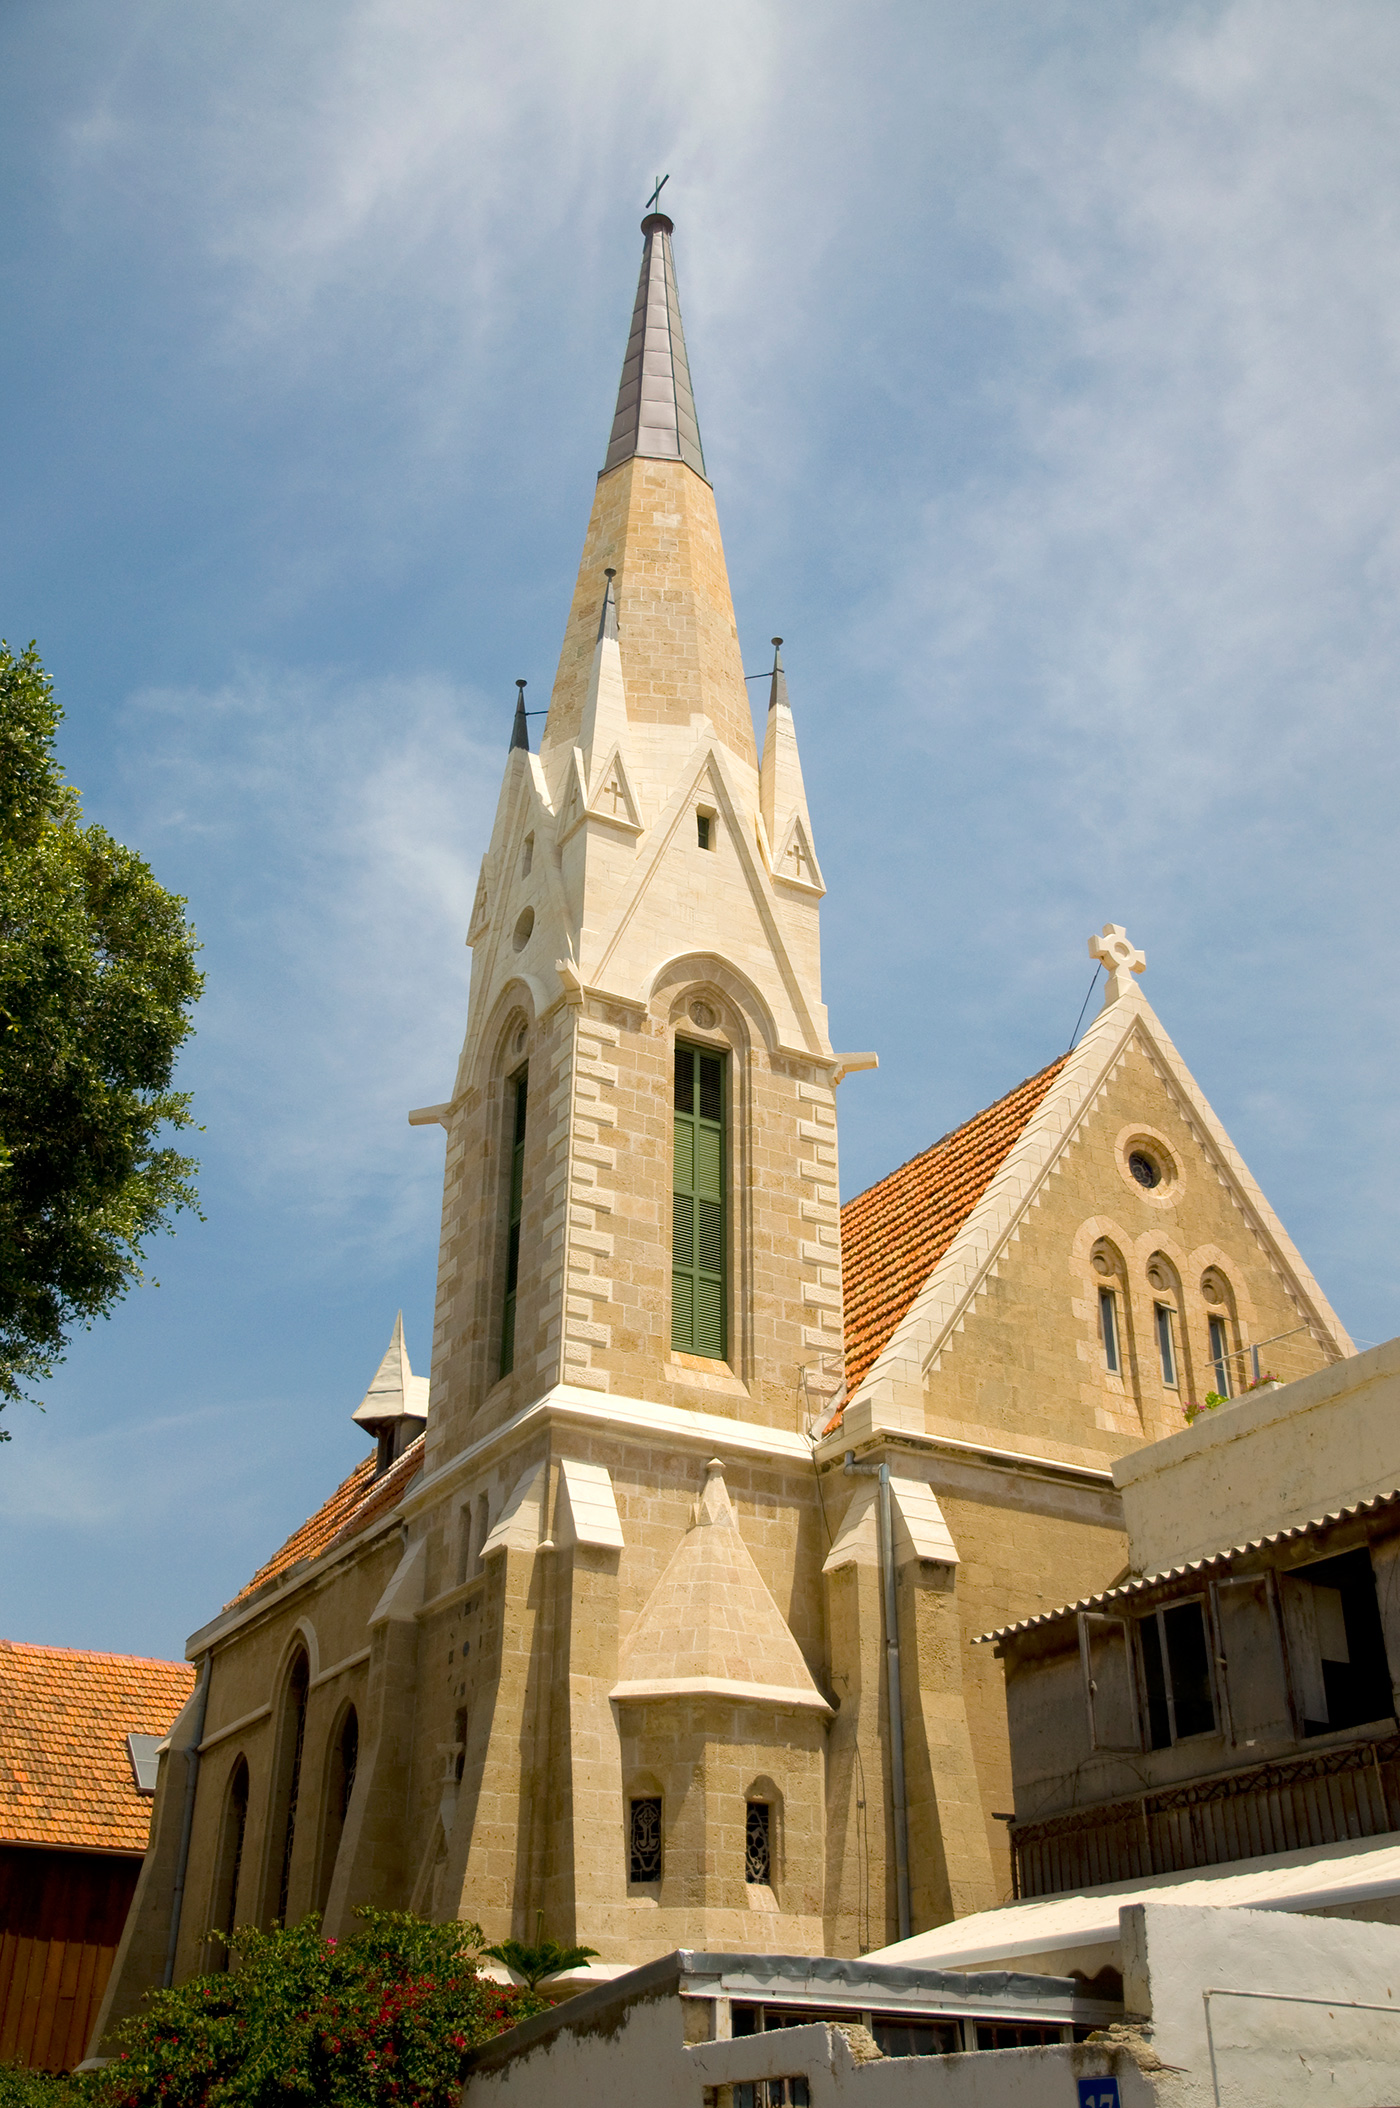 The Immanuel Lutheran Church in Jaffa